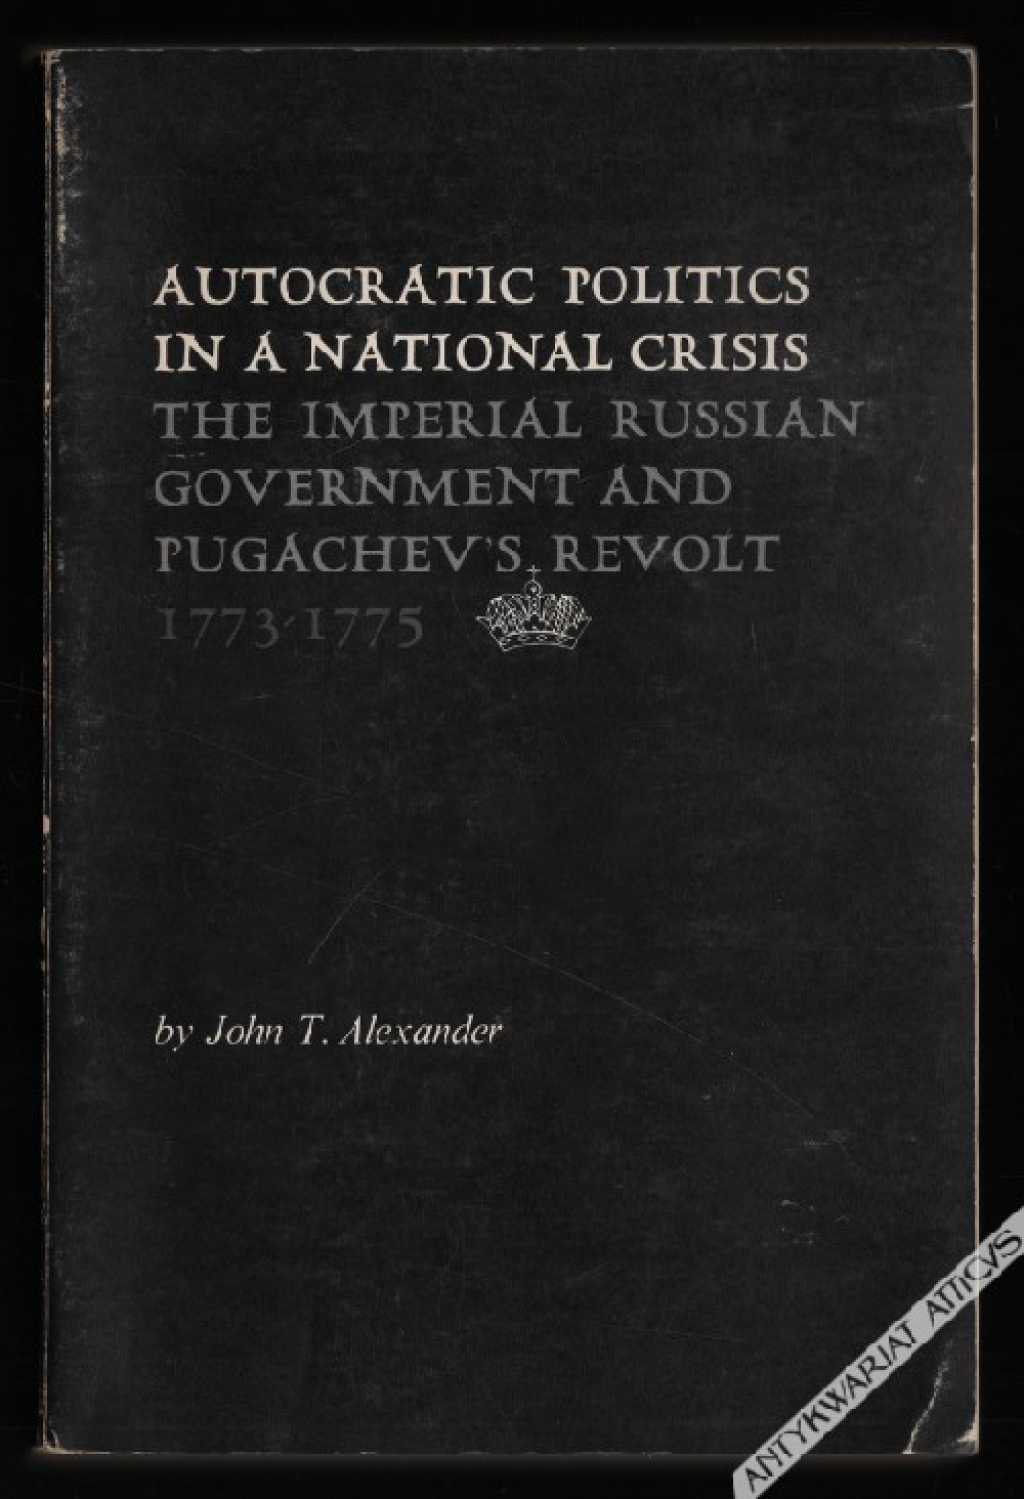 Autocratic politics in a national crisis. The Imperial Russian government and Pugachev's revolt 1773-1775 [egz. z księgozbioru J. Łojka]